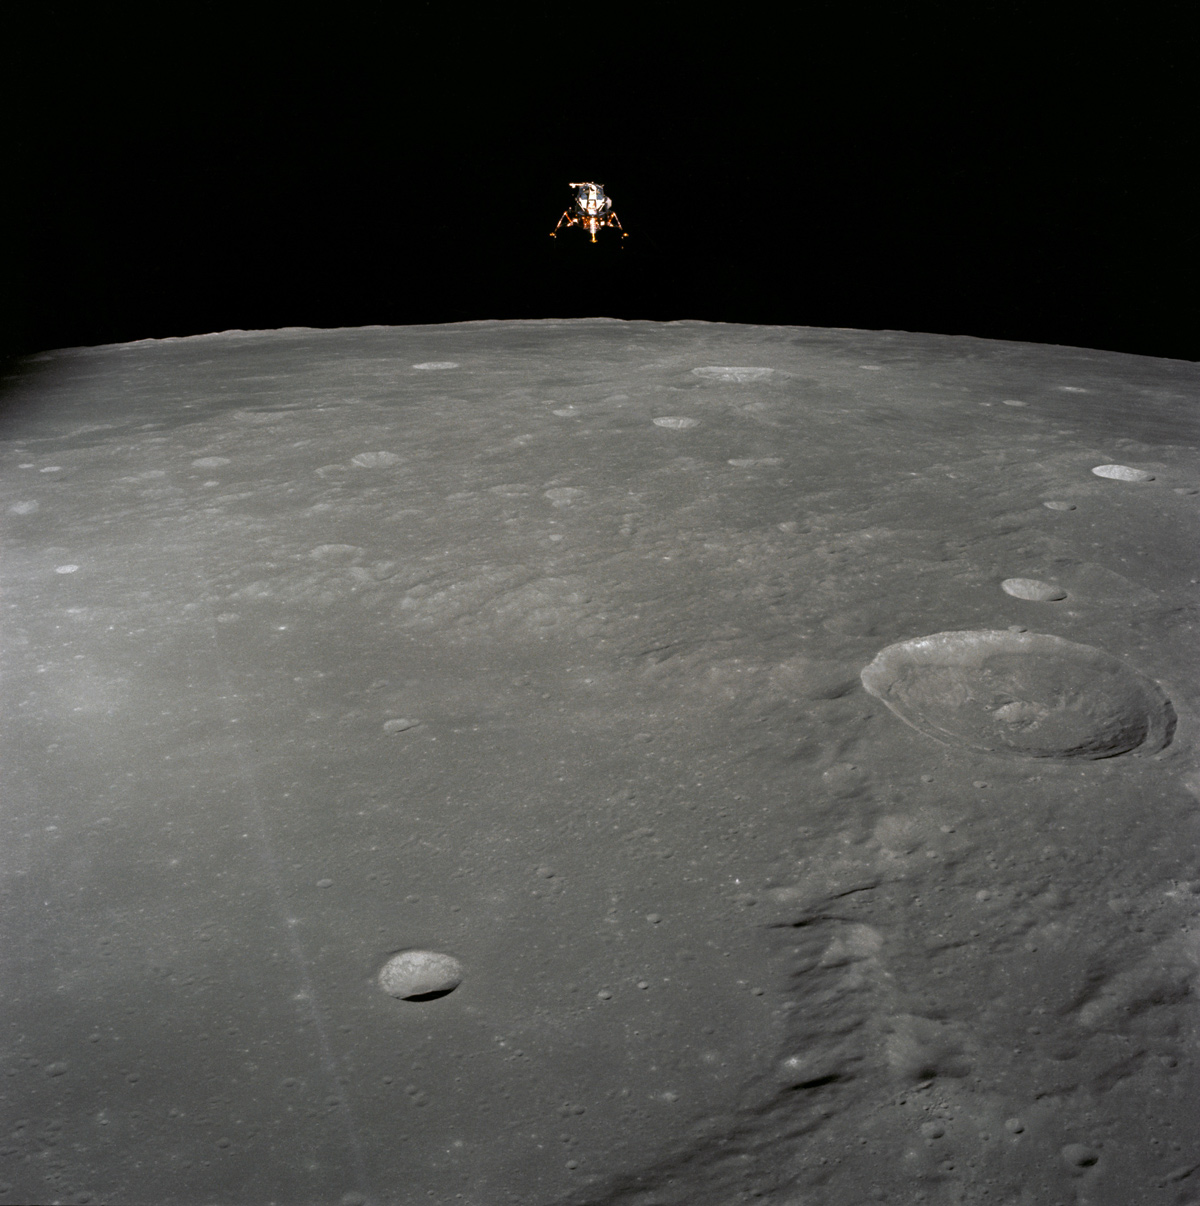 The Apollo 12 Lunar Module in lunar orbit